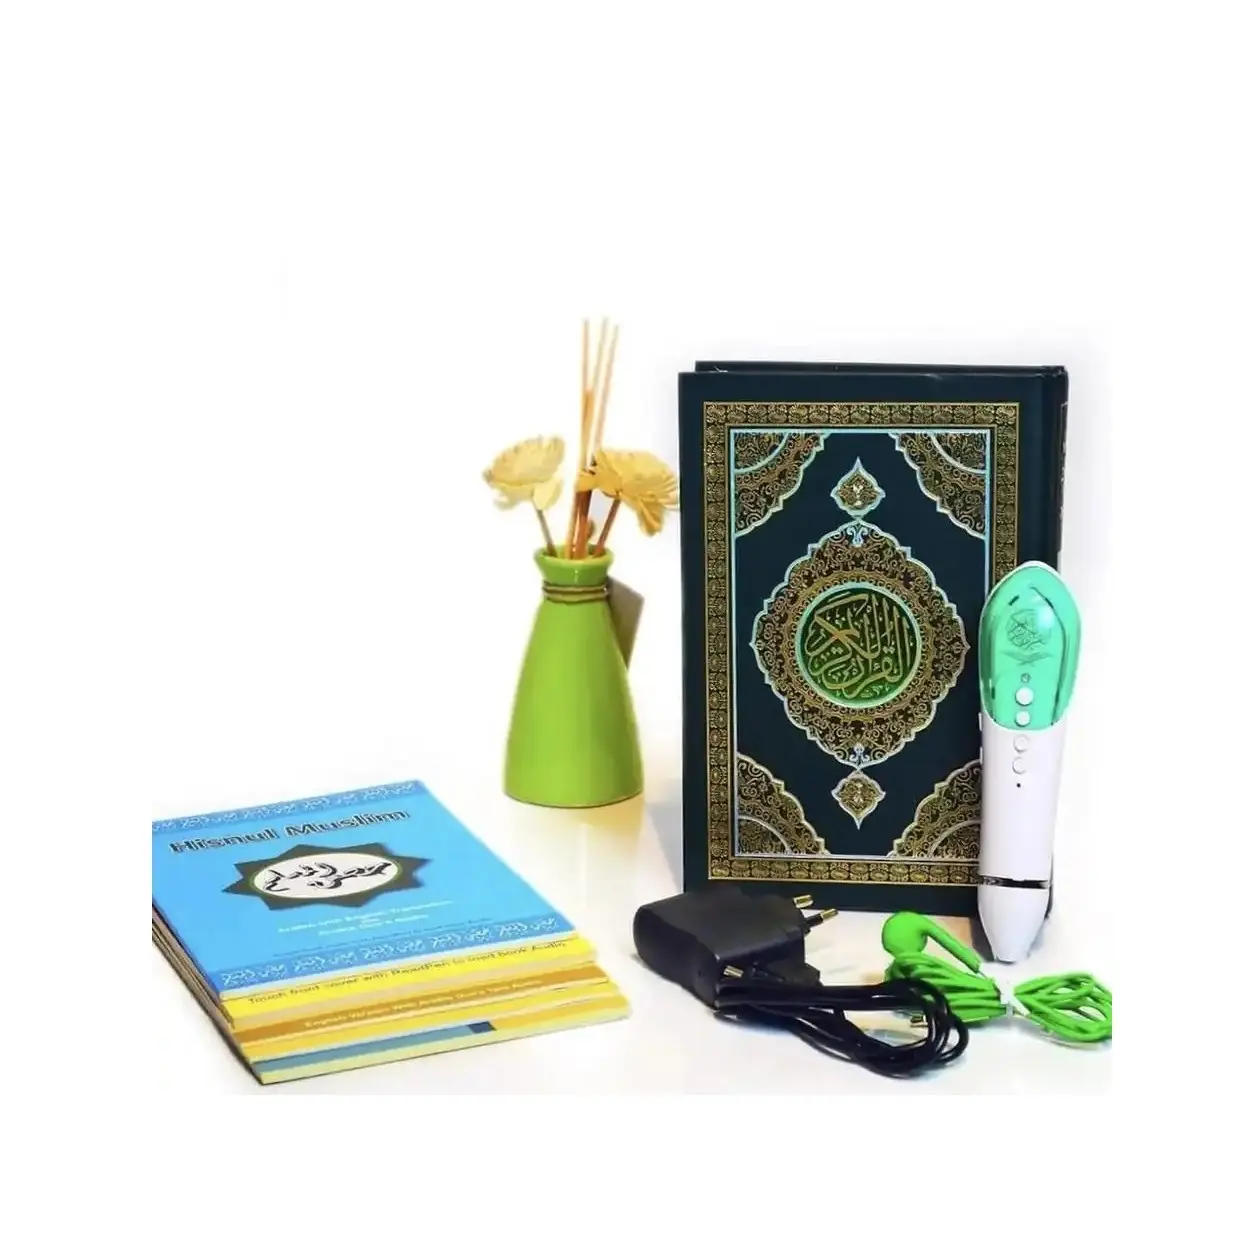 Best Quality PQ-16 Quran Reading Pen Muslim Quran Translation Digital Quran Read Pen Available at Affordable Price